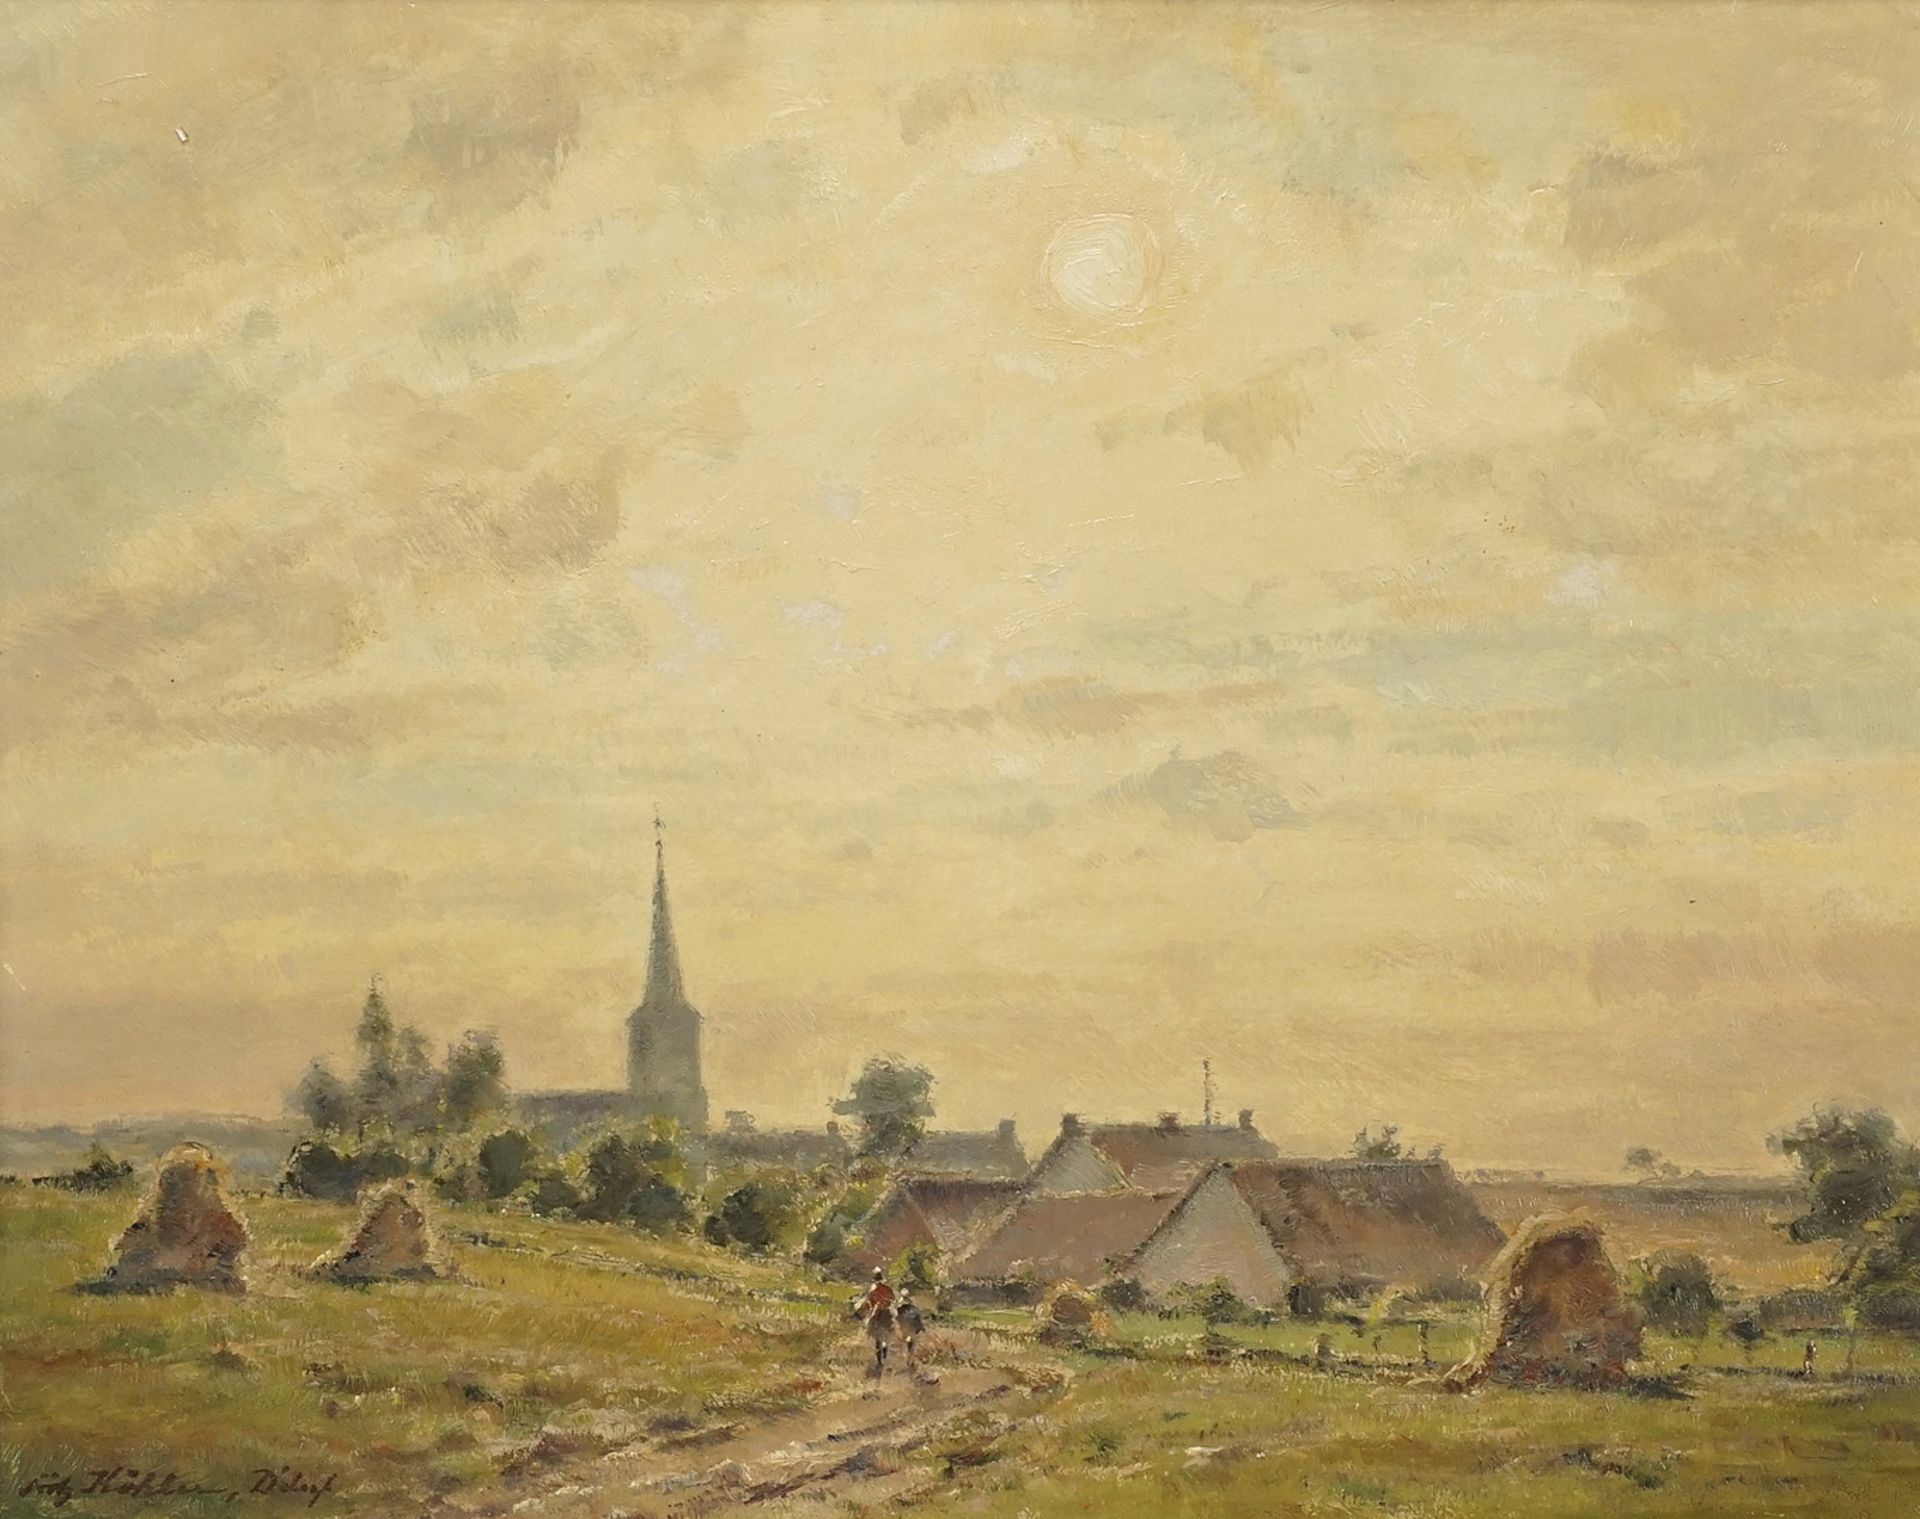 Fritz Köhler, "Dorf in der Spätnachmittagssonne"